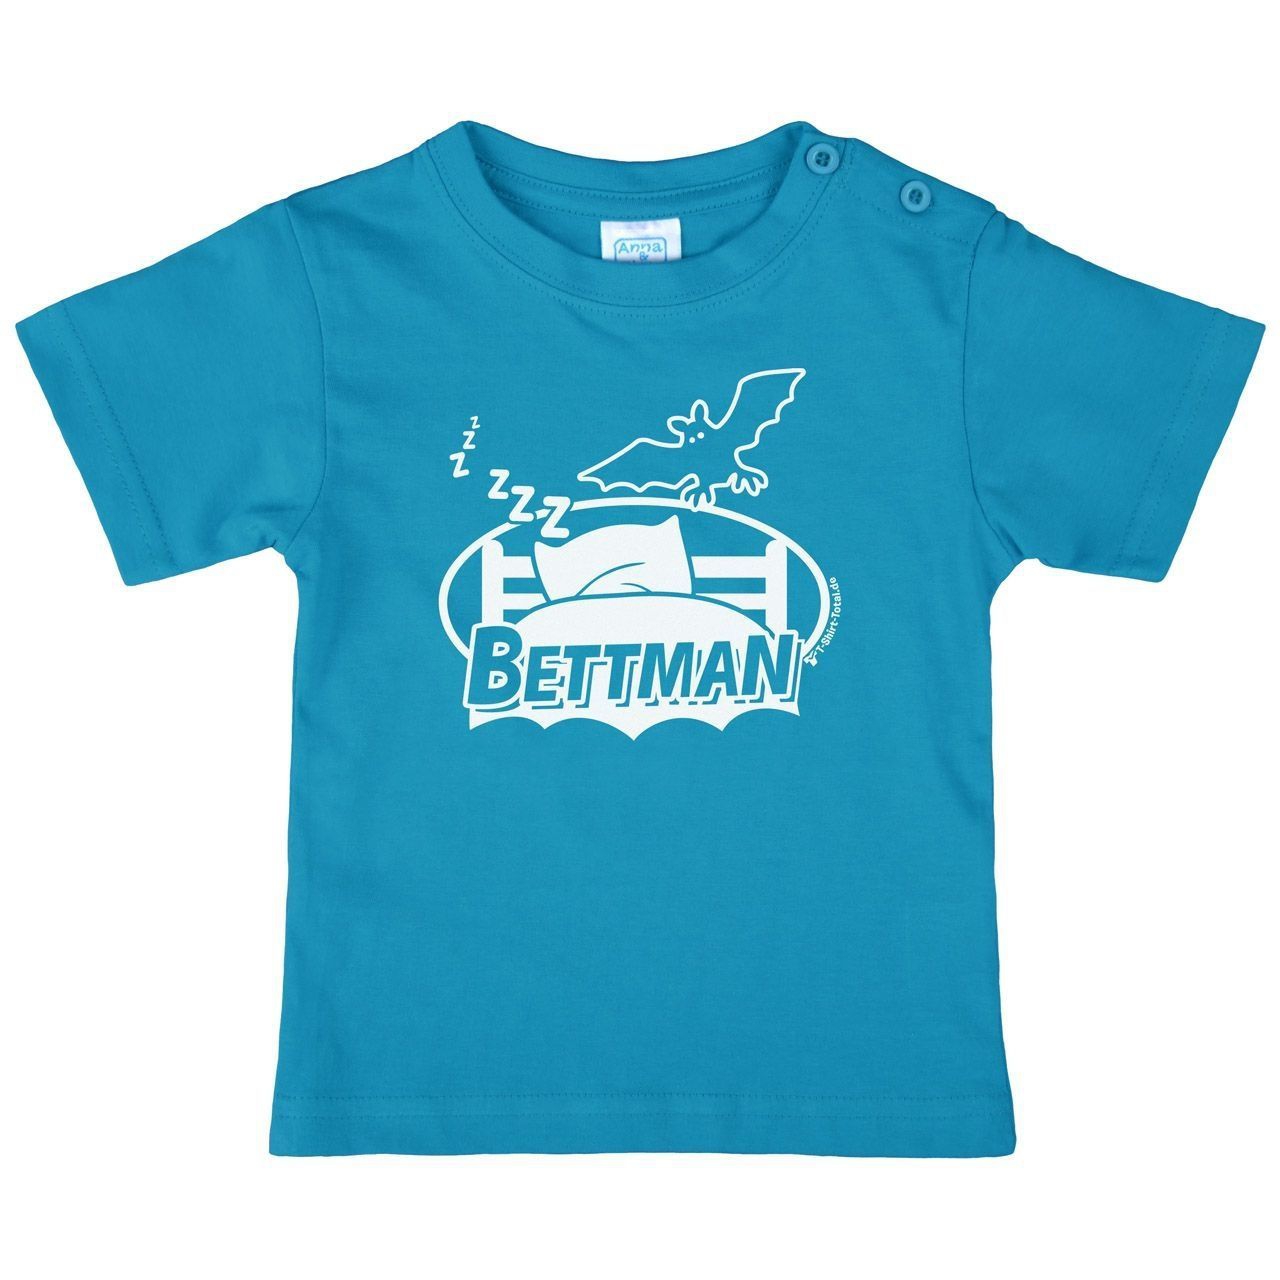 Bettman Kinder T-Shirt türkis 56 / 62